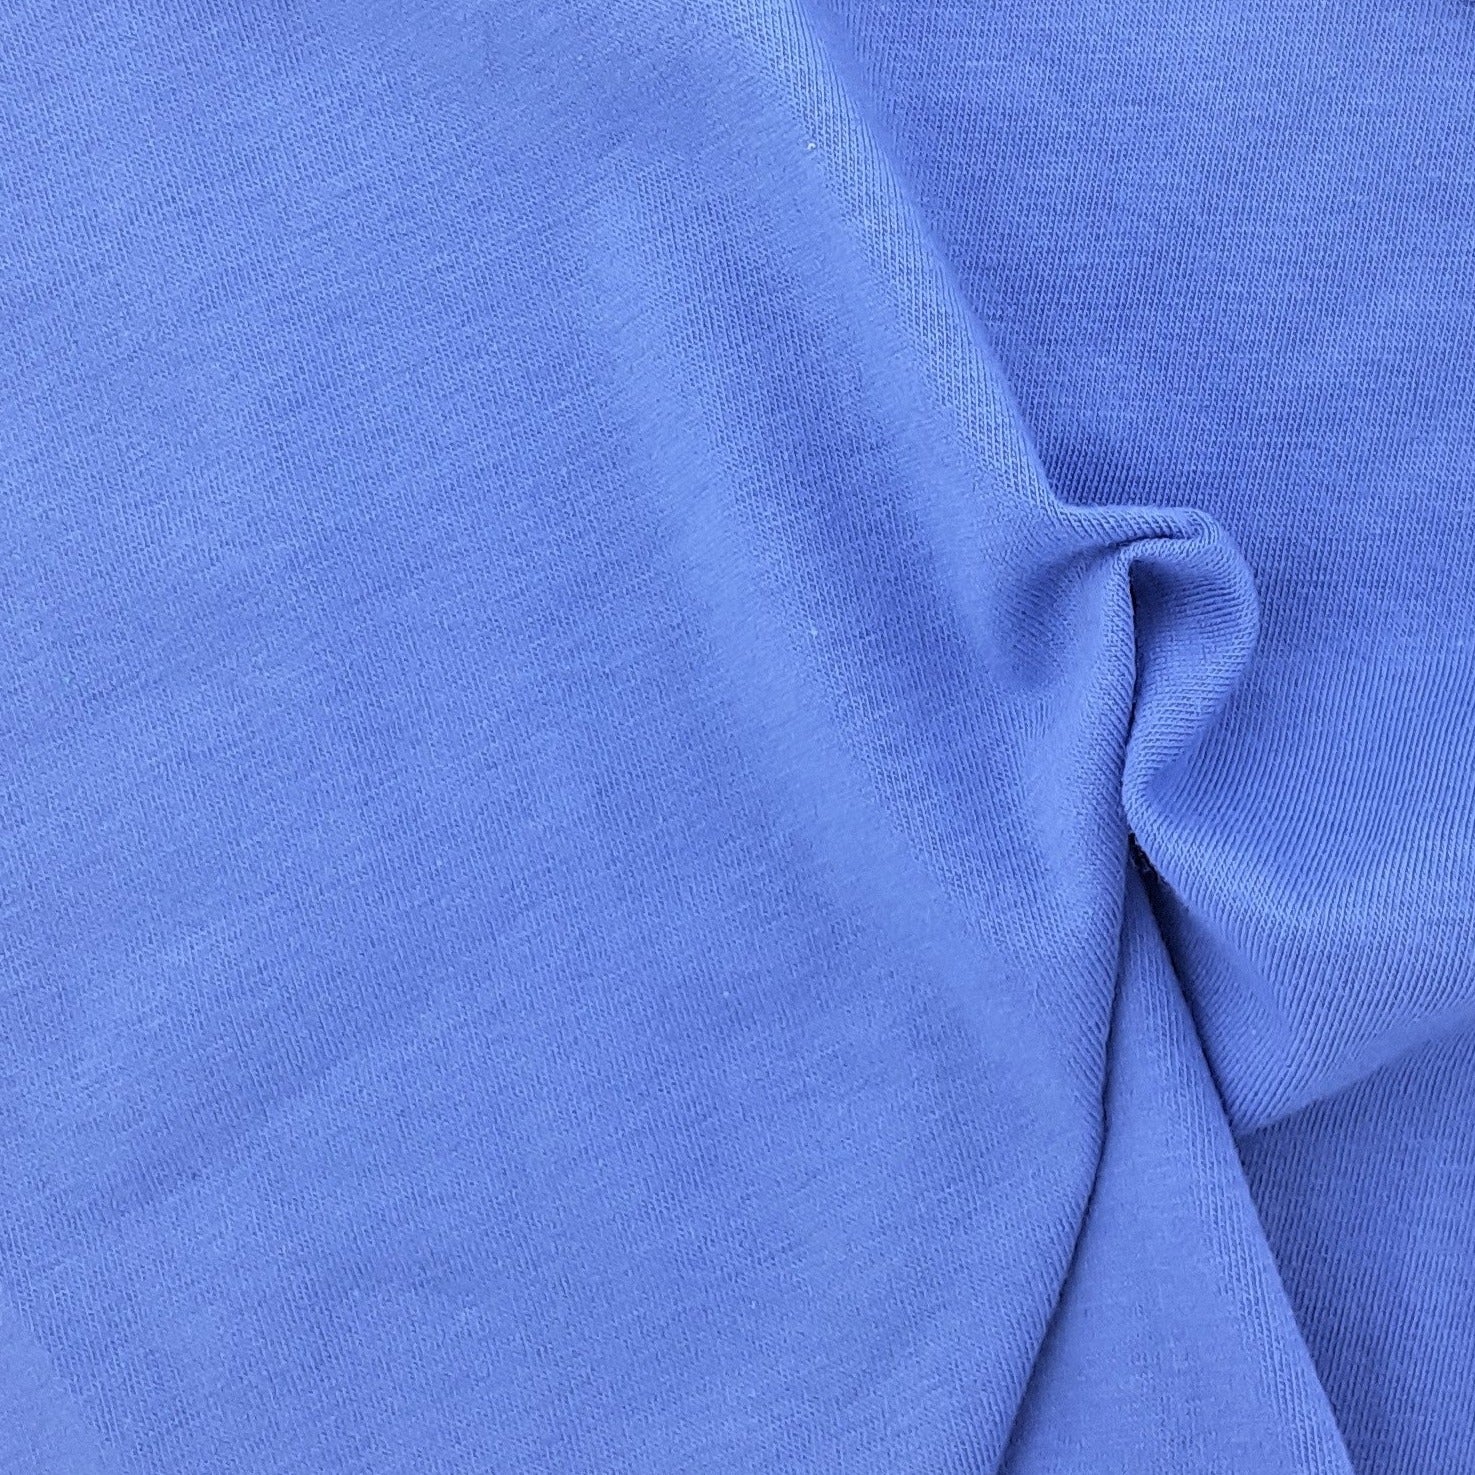 Solid Royal Blue 4 Way Stretch 10 oz Cotton Lycra Jersey Knit Fabric